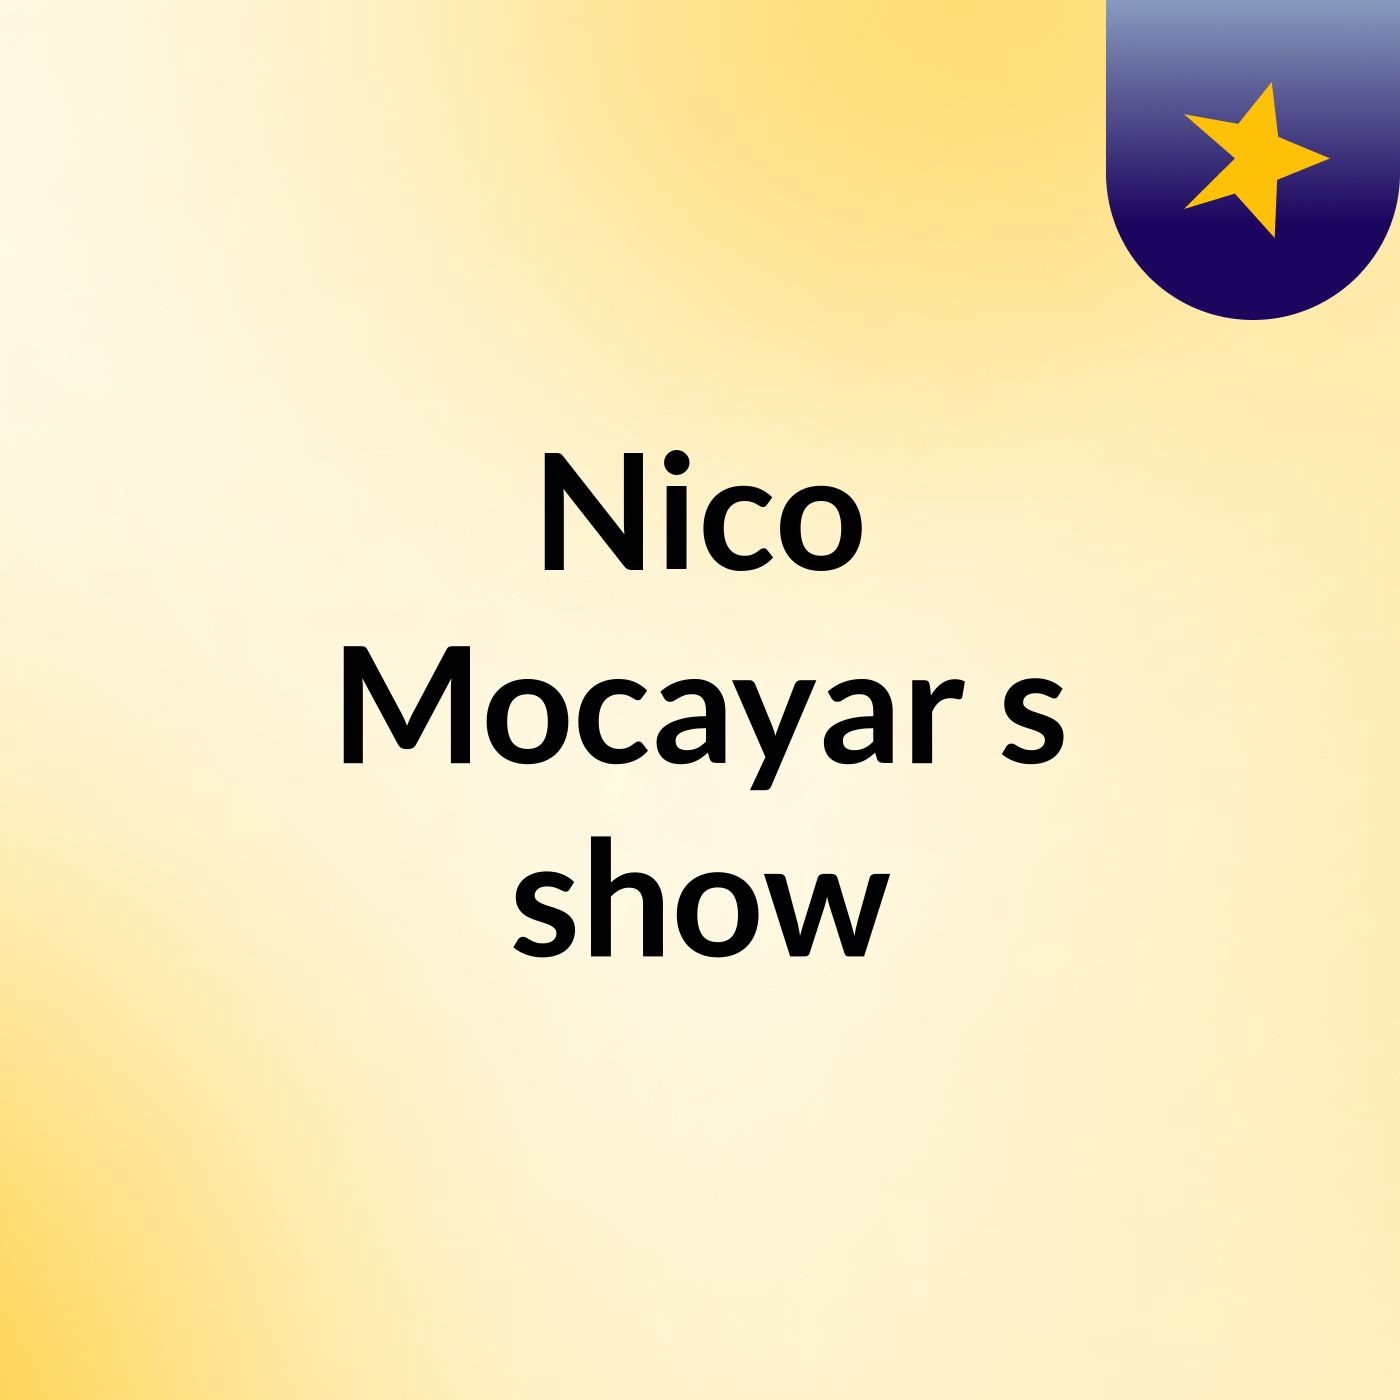 Nico Mocayar's show